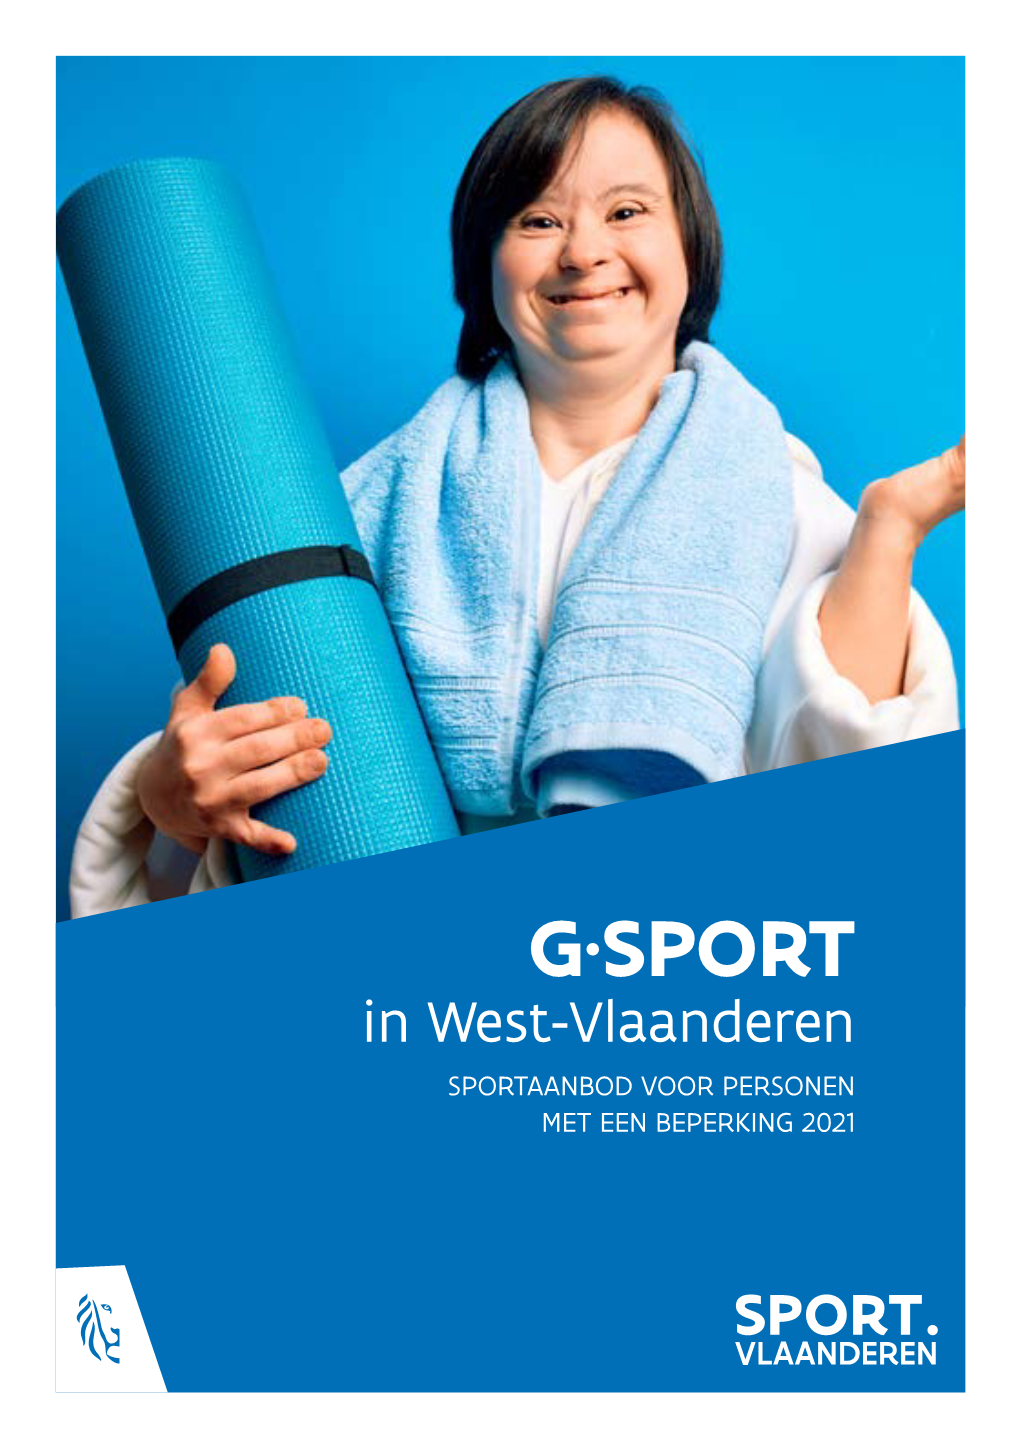 G-Sportbrochure Provincie West-Vlaanderen 2021.Pdf